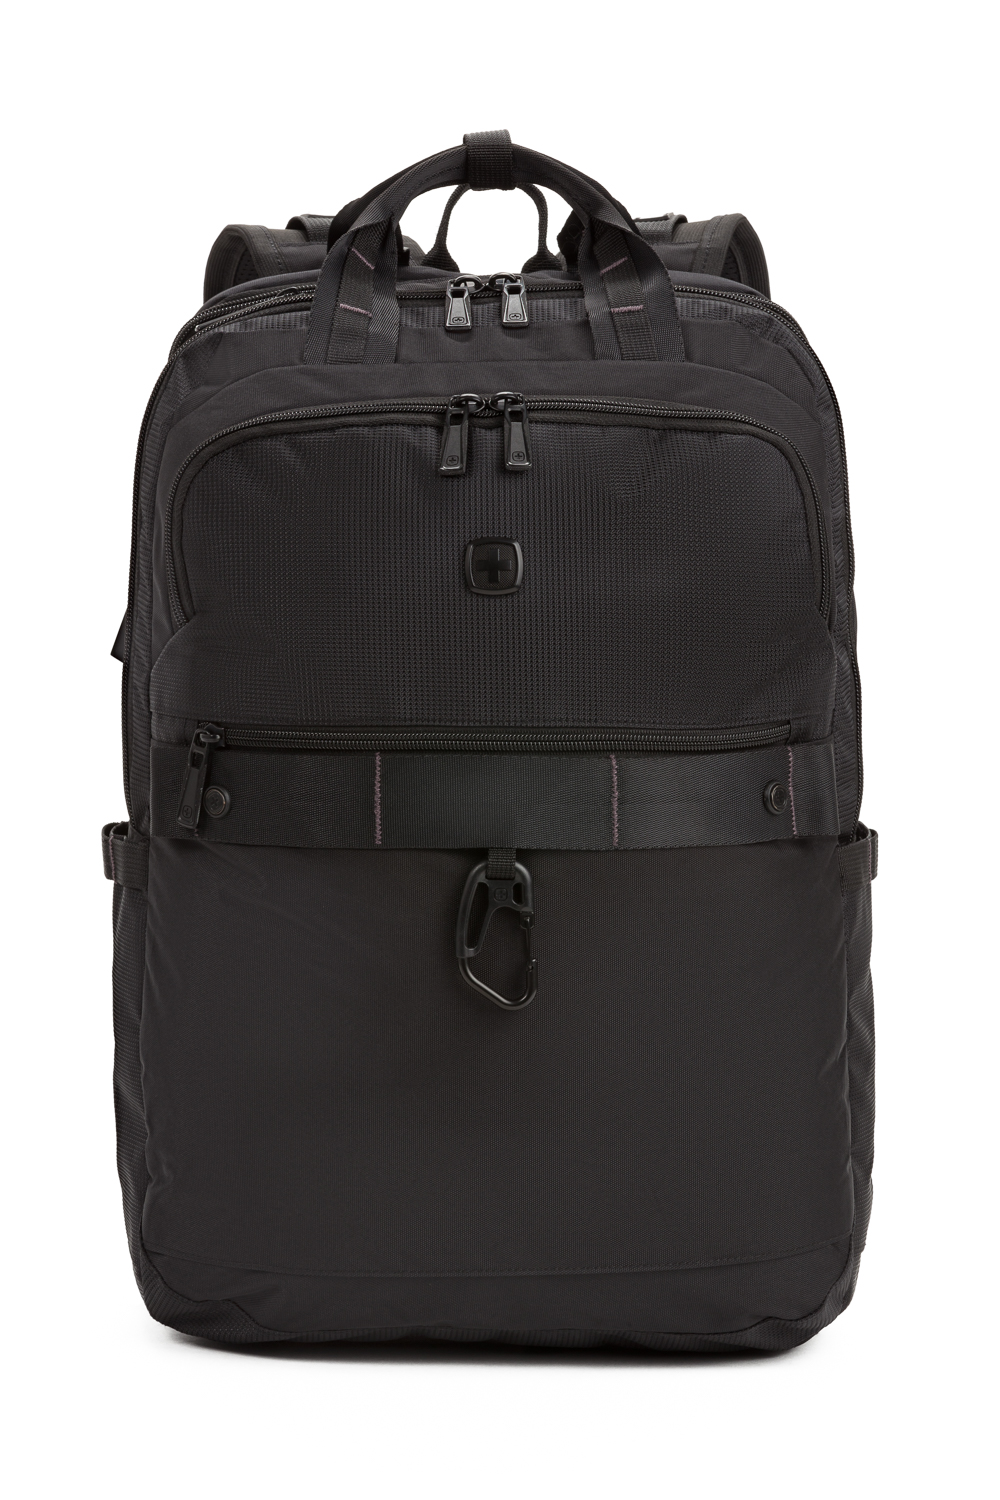 Swissgear 2917 USB ScanSmart Laptop Backpack - Black